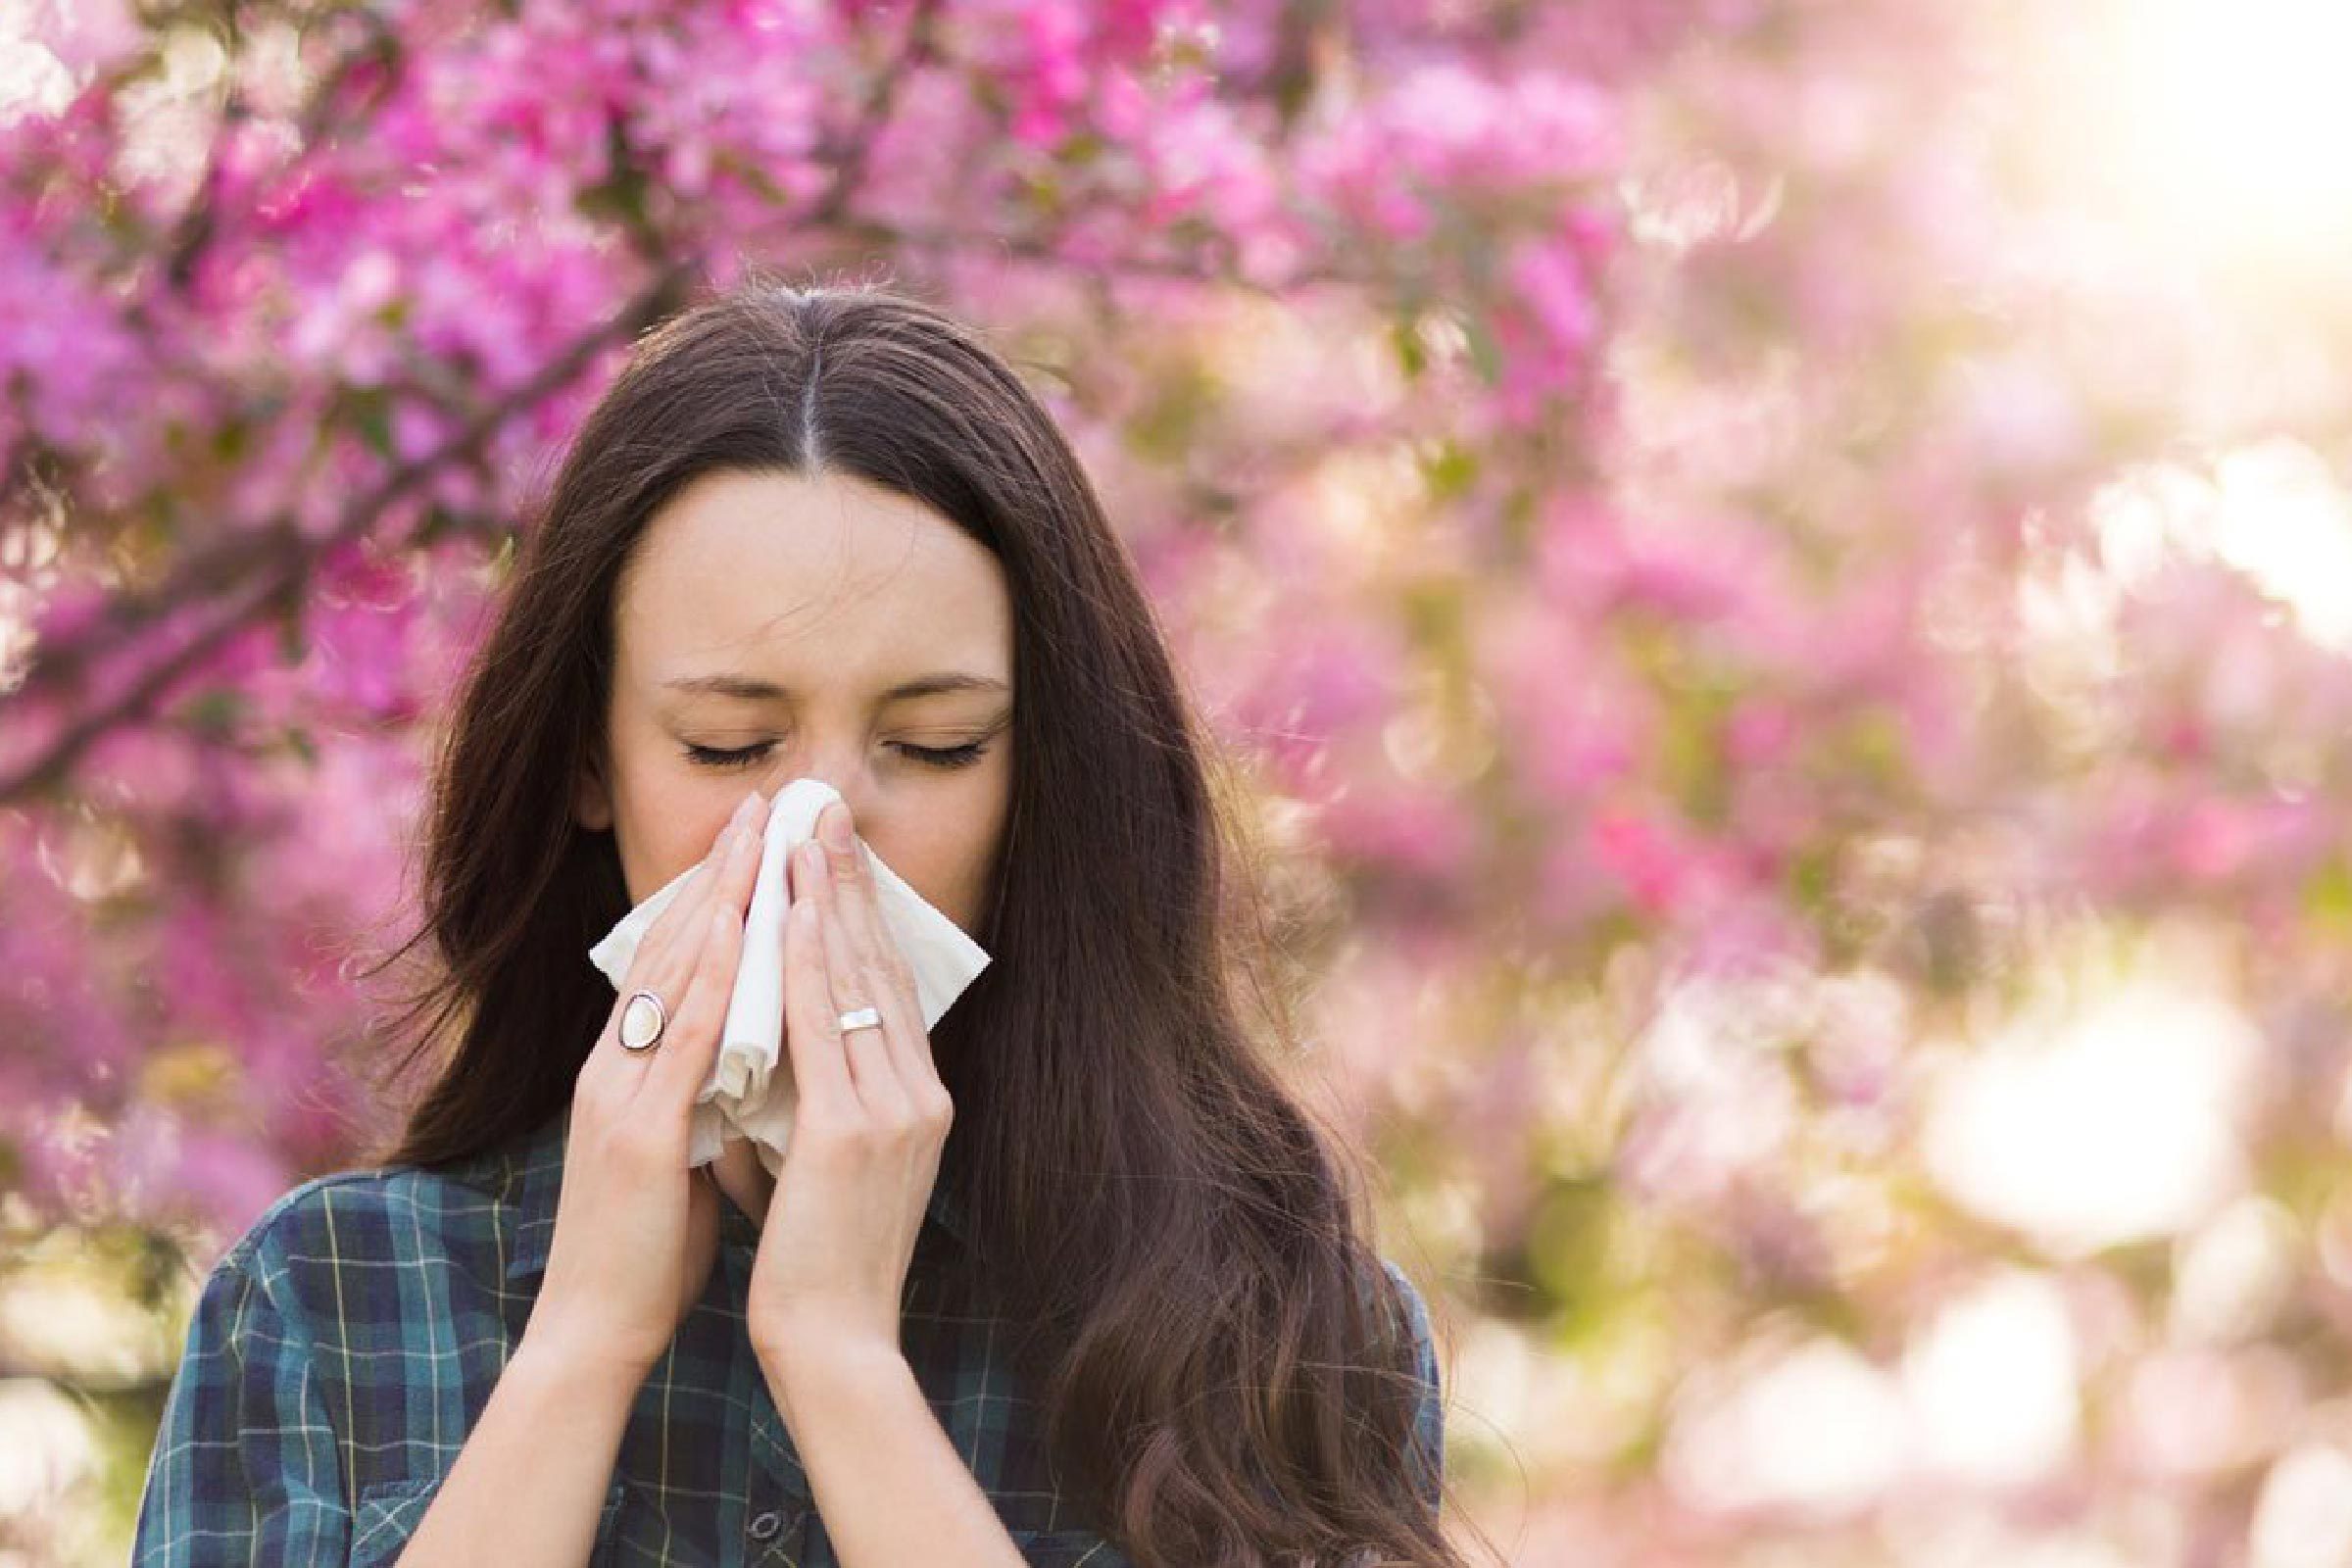 Allergies to pollen